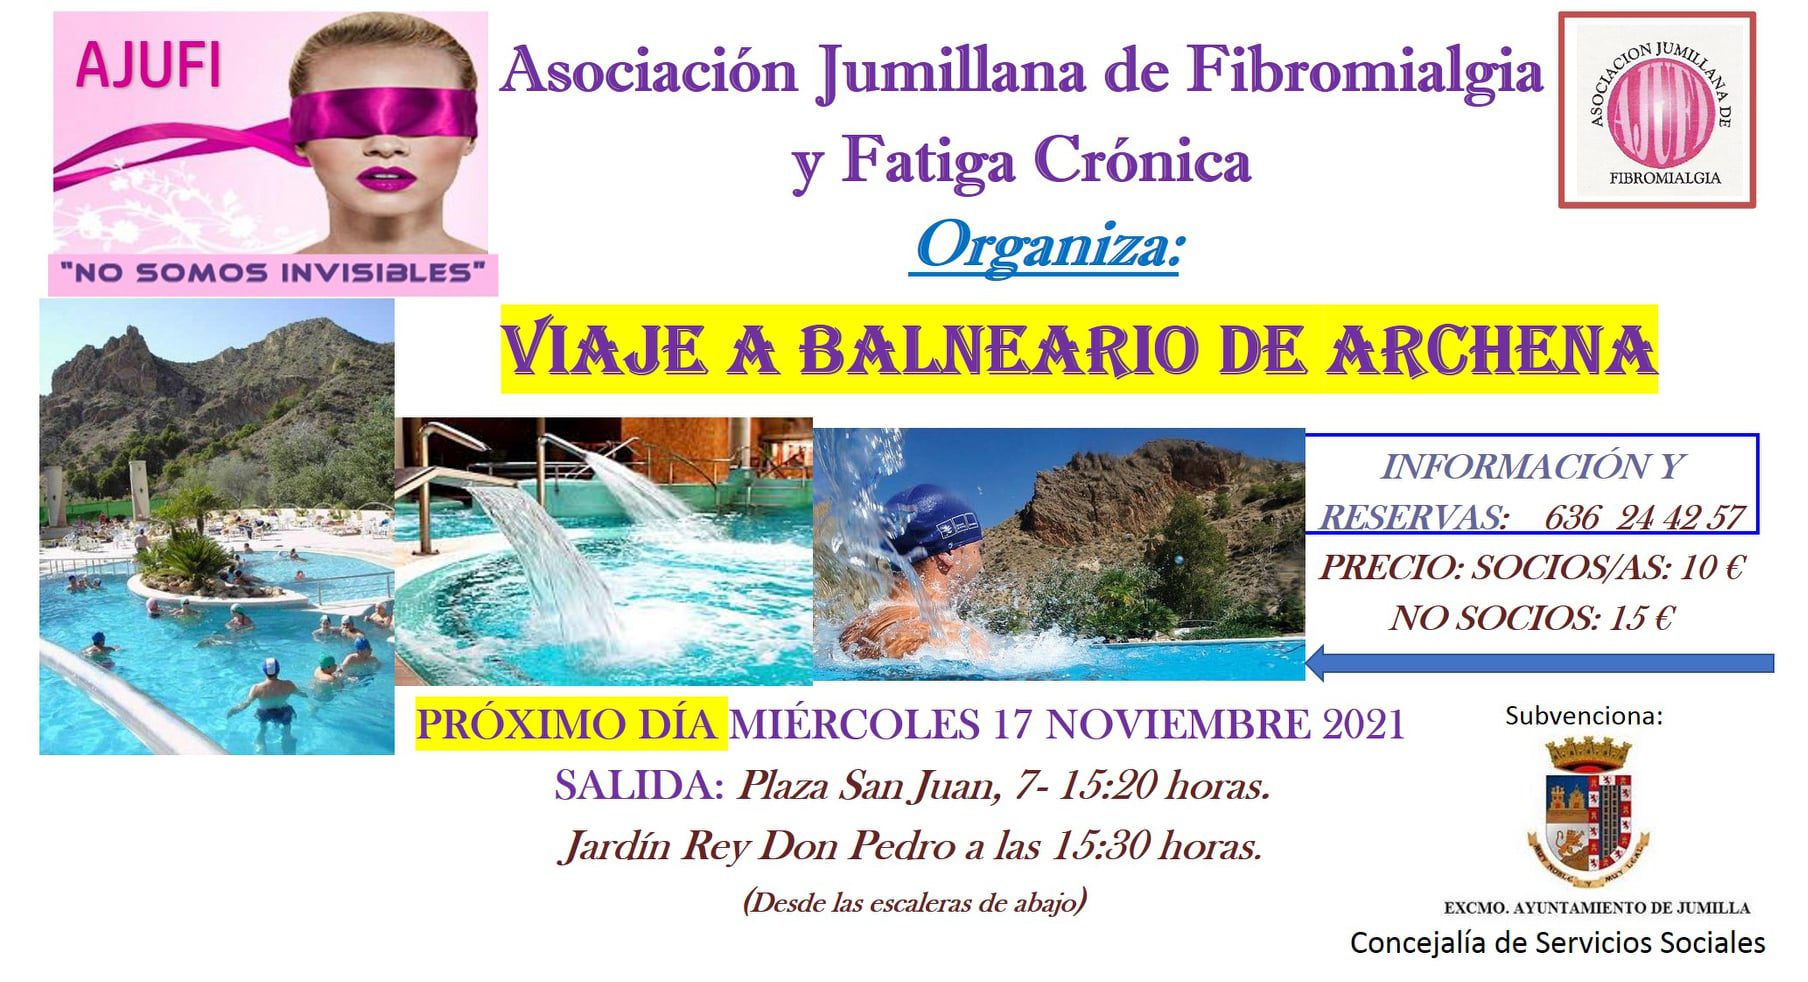 La Asociación de Fibromialgia organiza un viaje al balneario de Archena